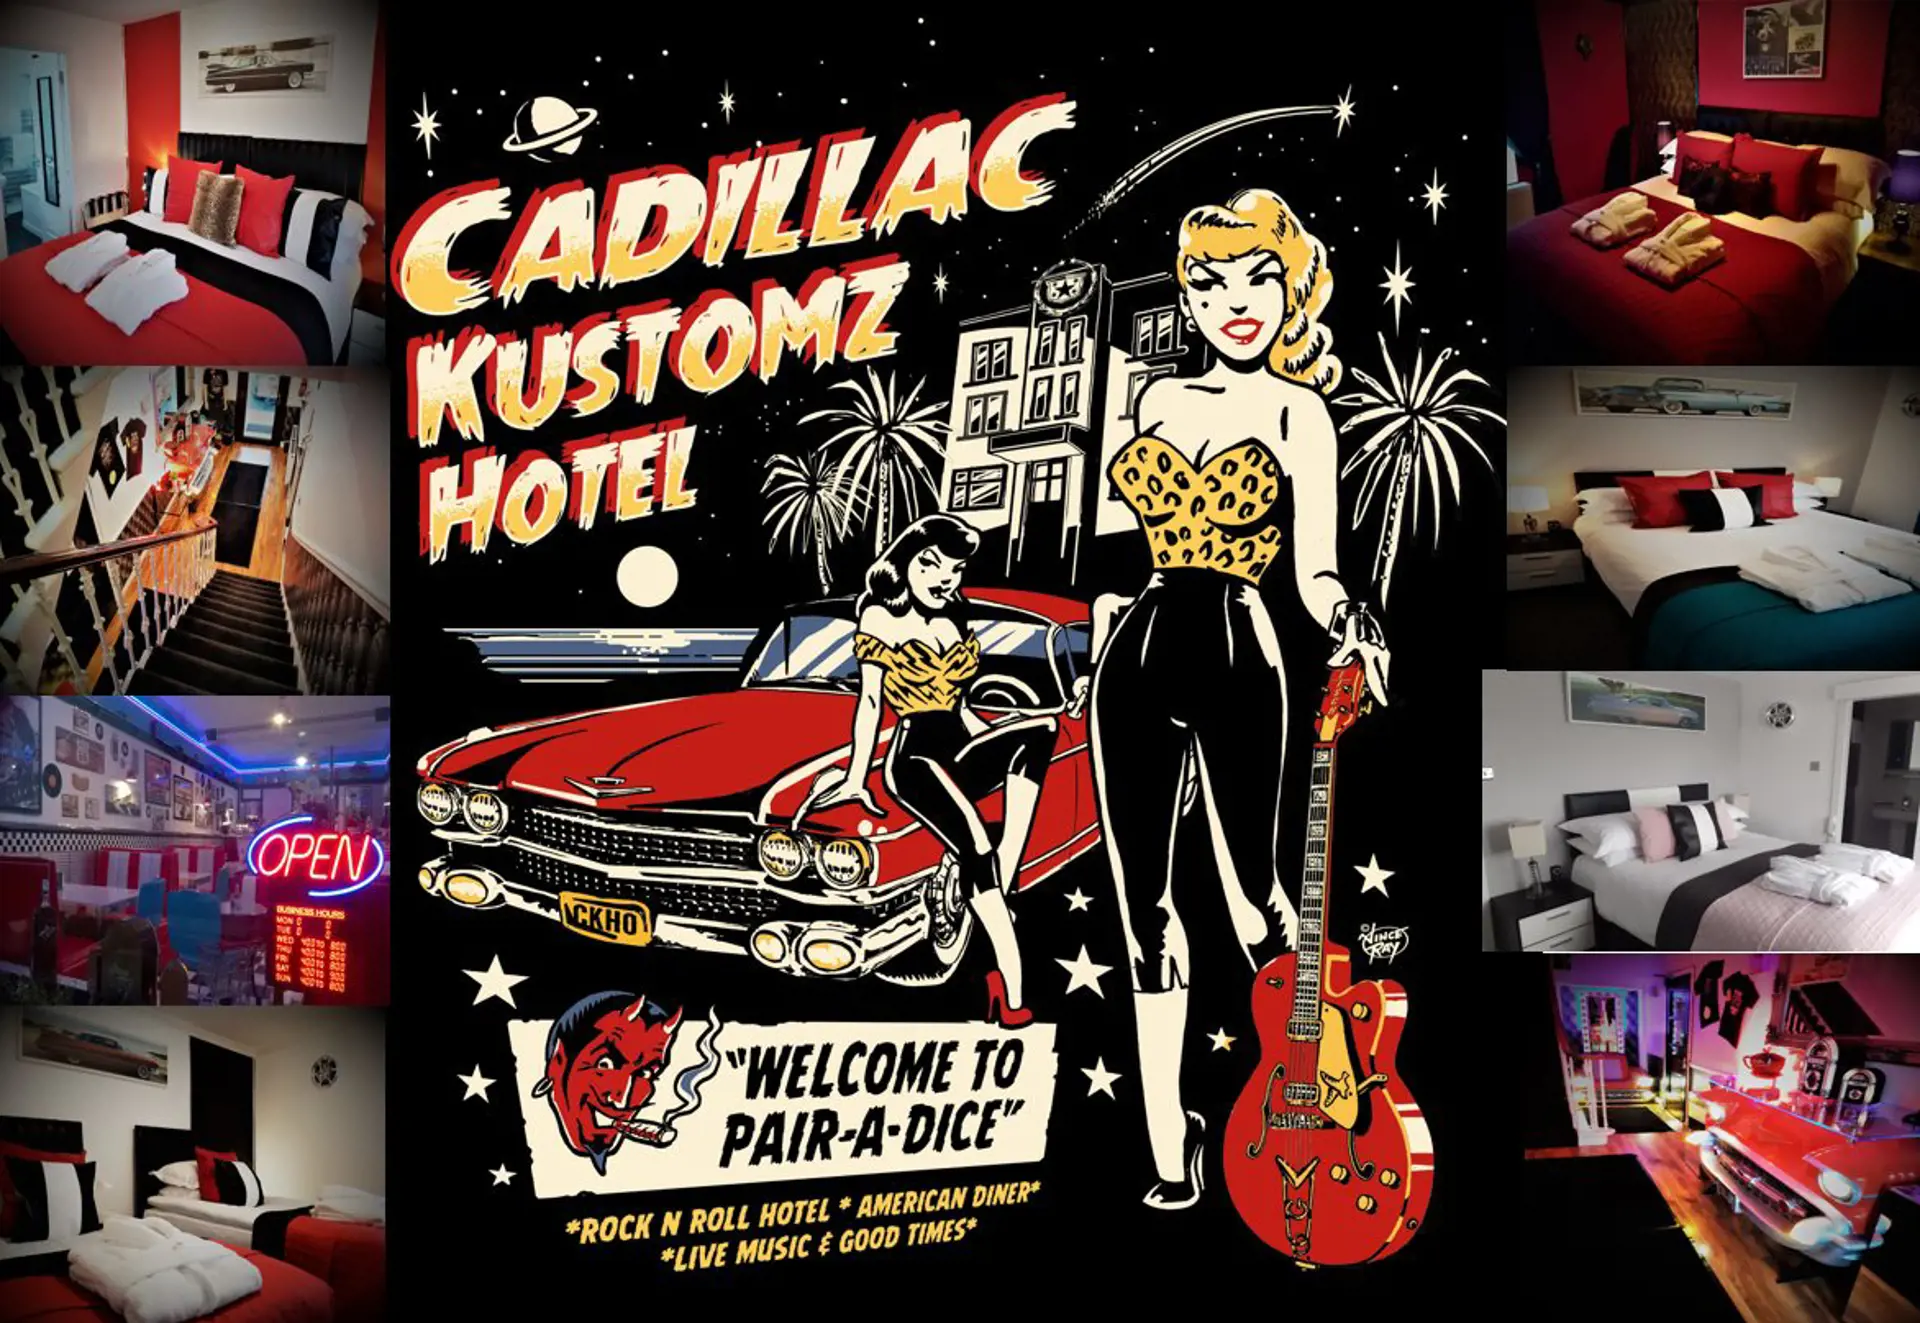 Cadillac Kustomz Hotel